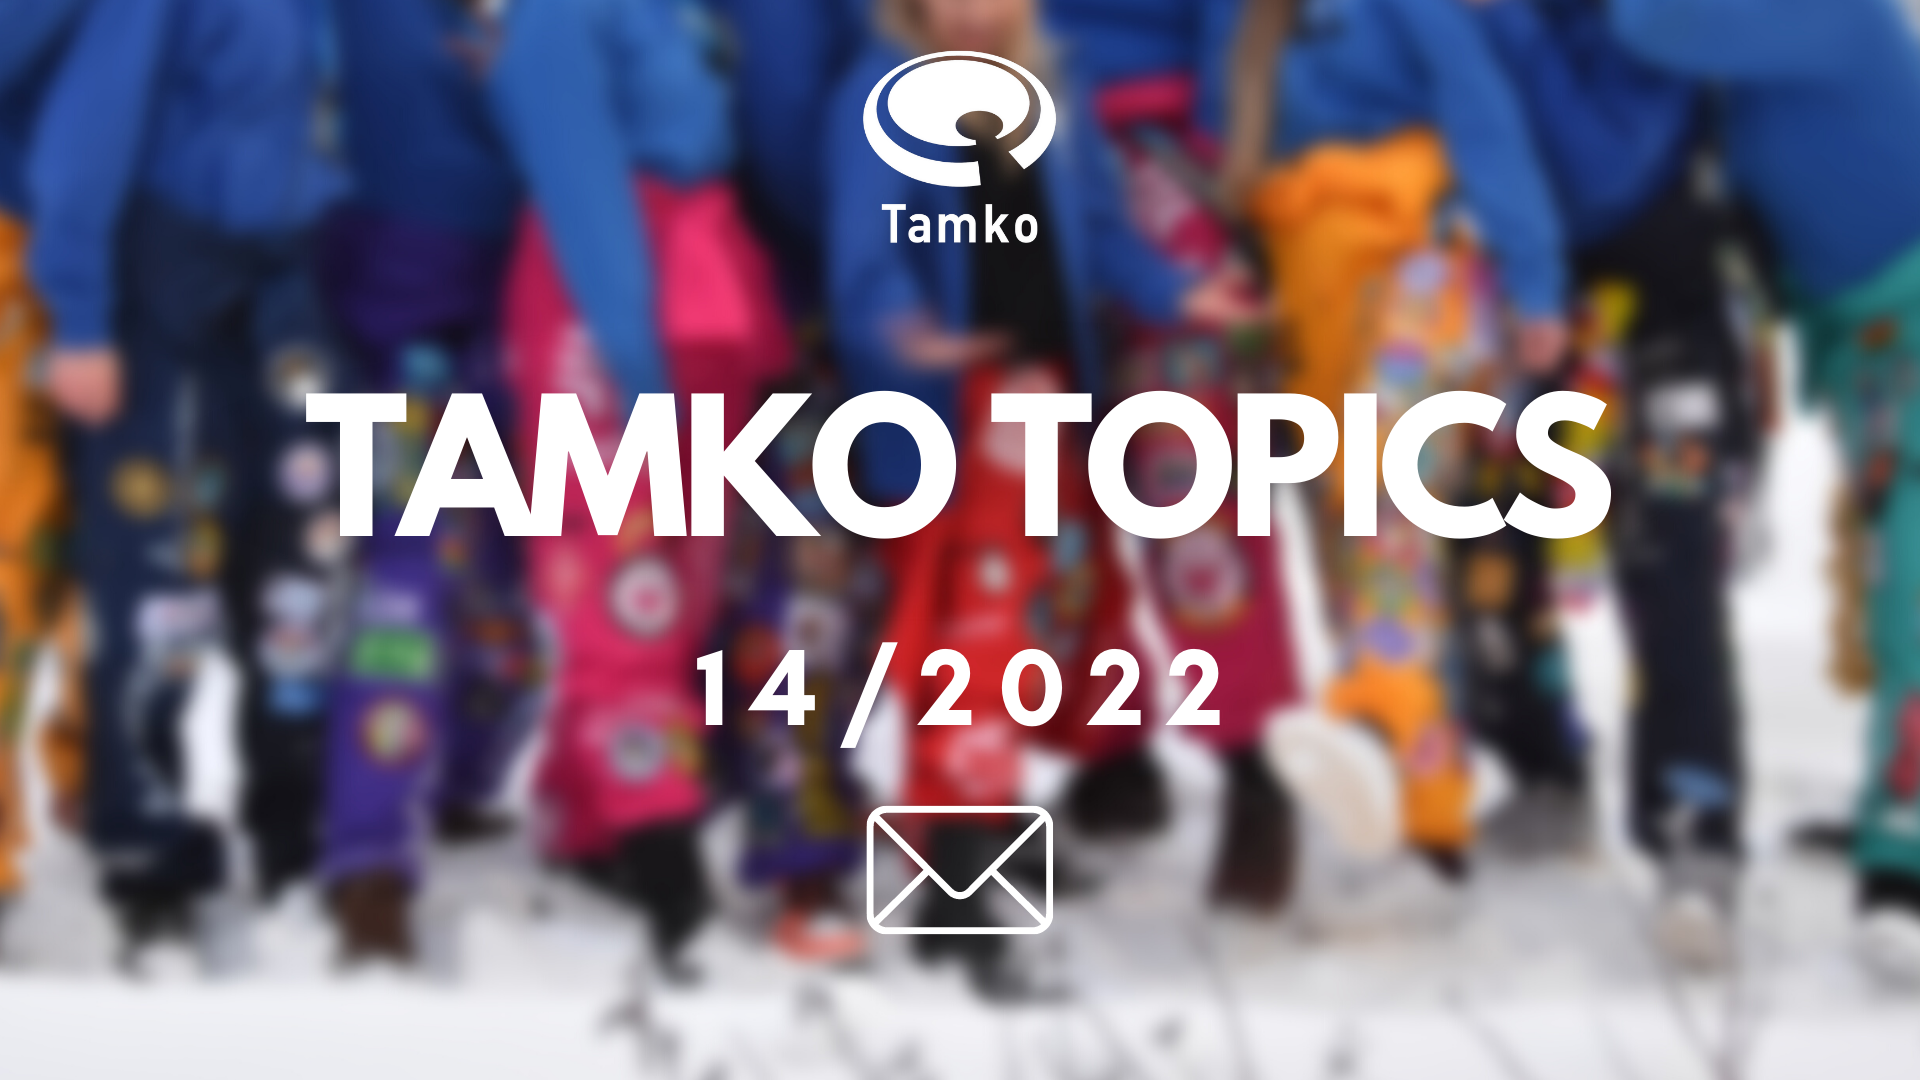 TAMKO TOPICS 14/2022